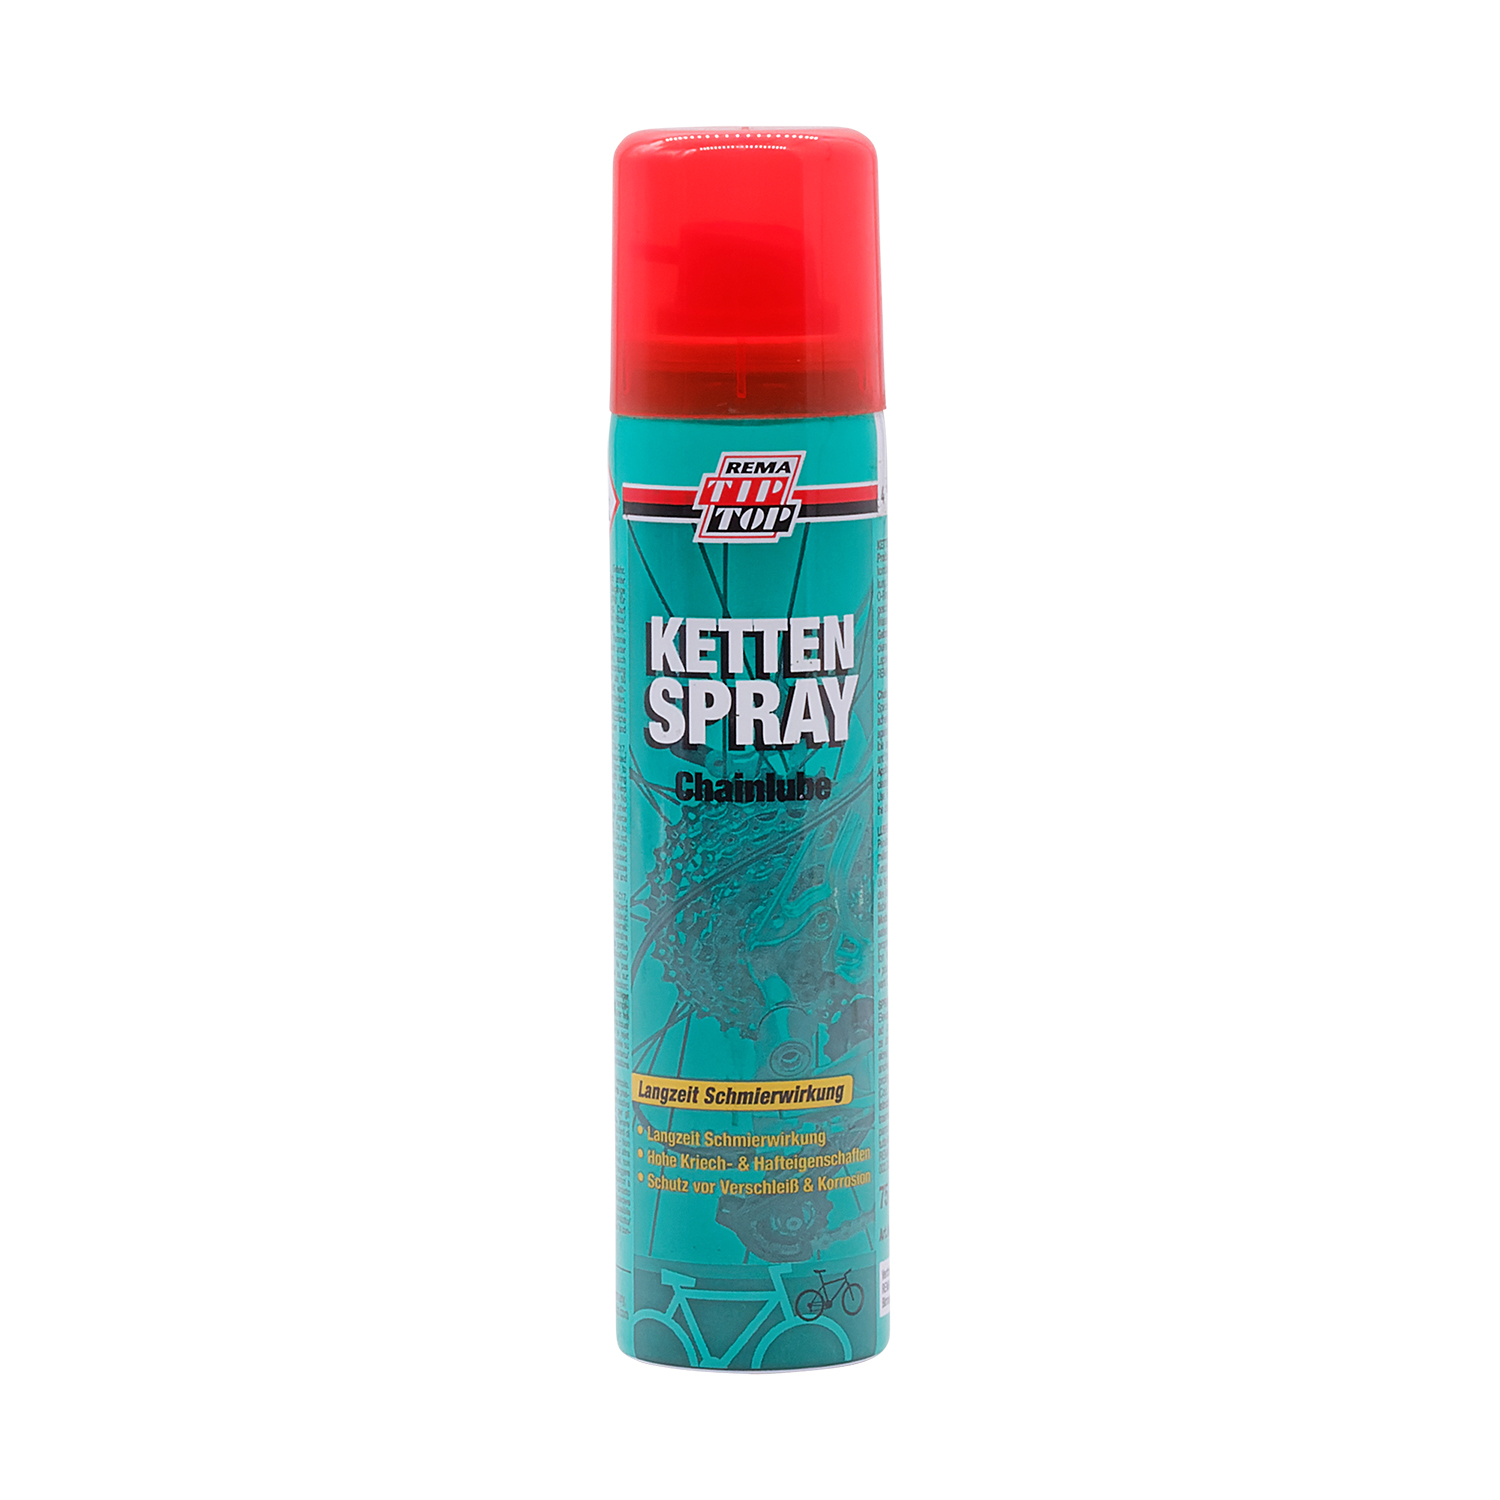 Ketten-Spray: TIP TOP Kettenspray 75 ml Sprühdose (VE = 20)